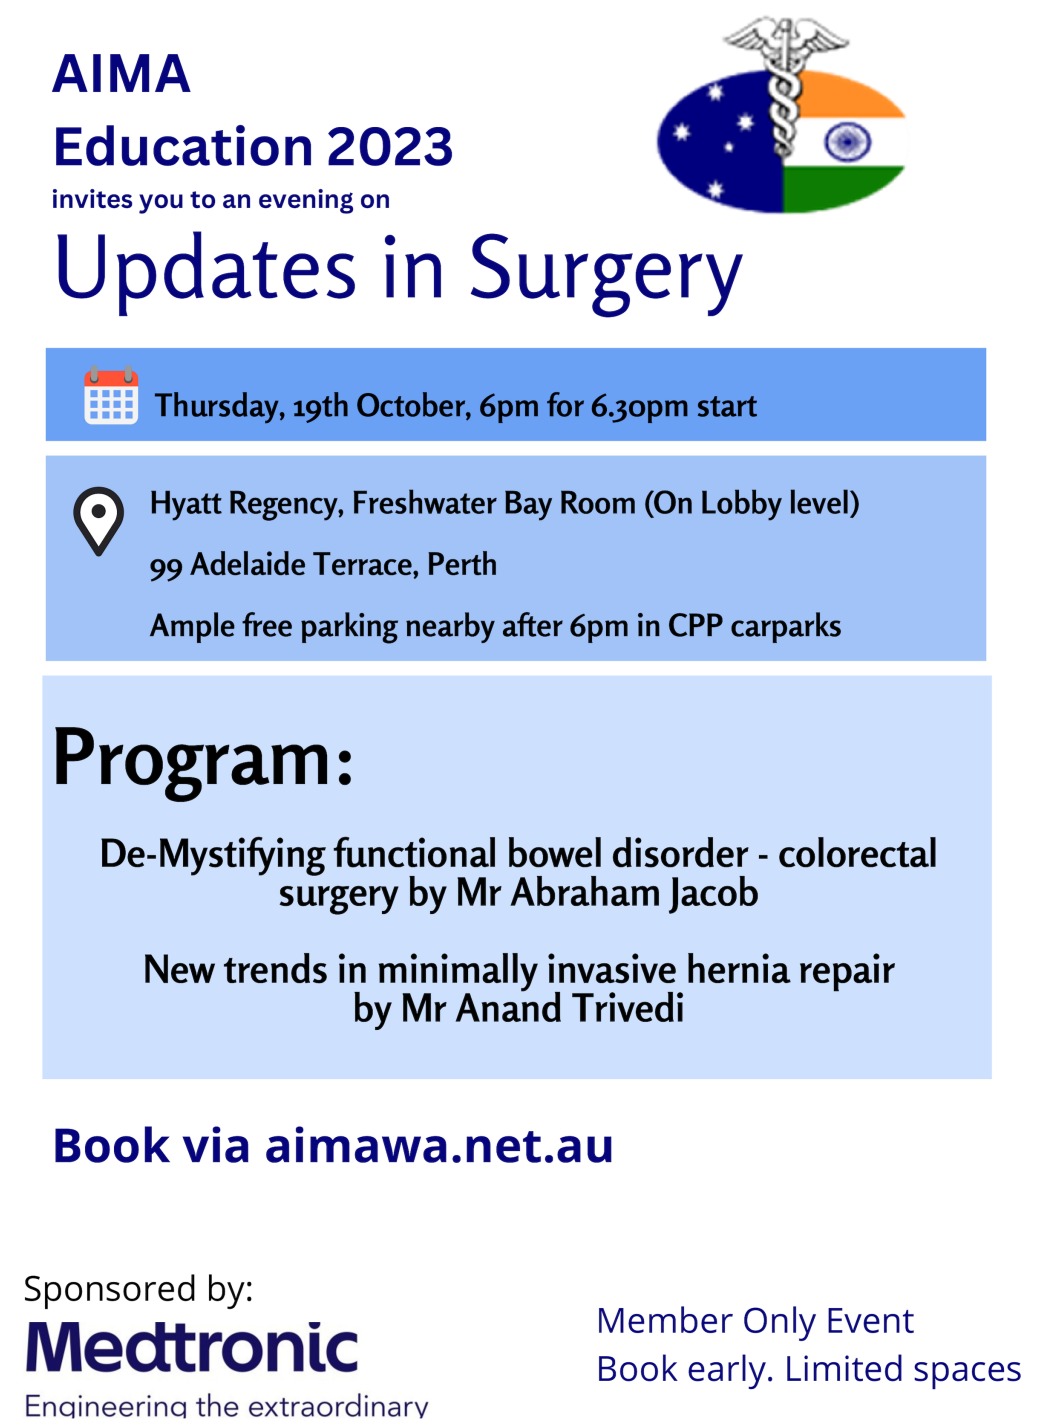 AIMA Education Event – Updates on Surgery